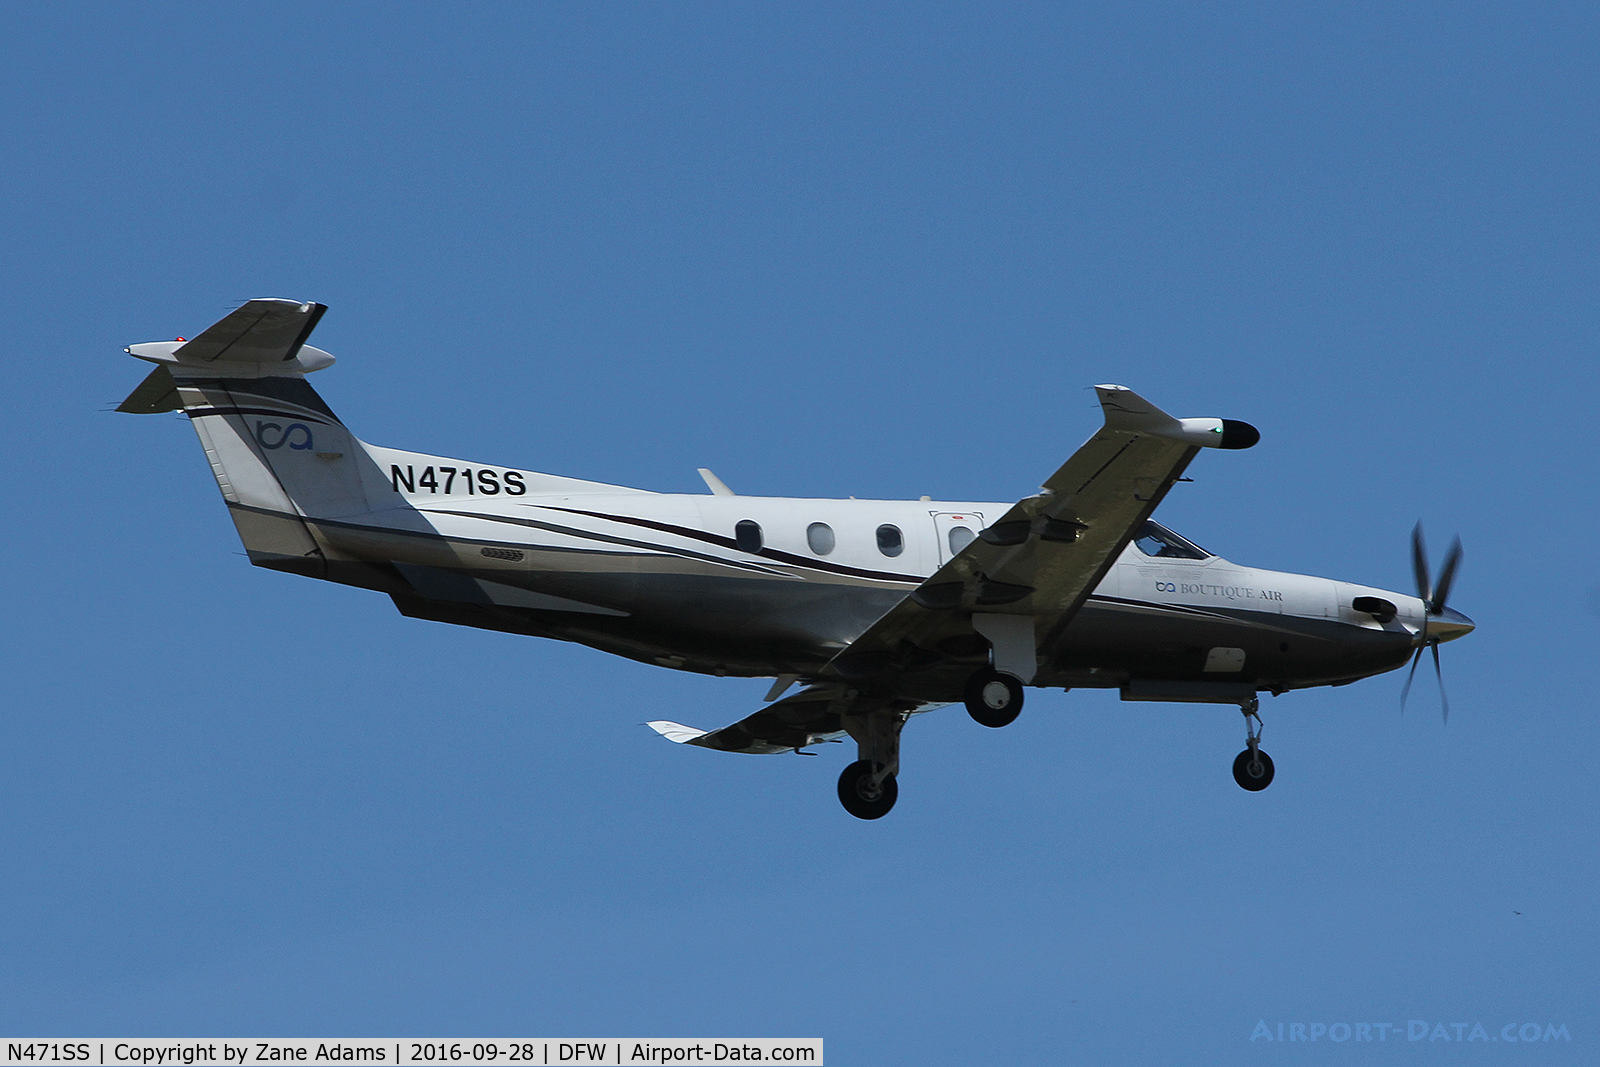 N471SS, 2006 Pilatus PC-12/47 C/N 739, Arriving at DFW Airport